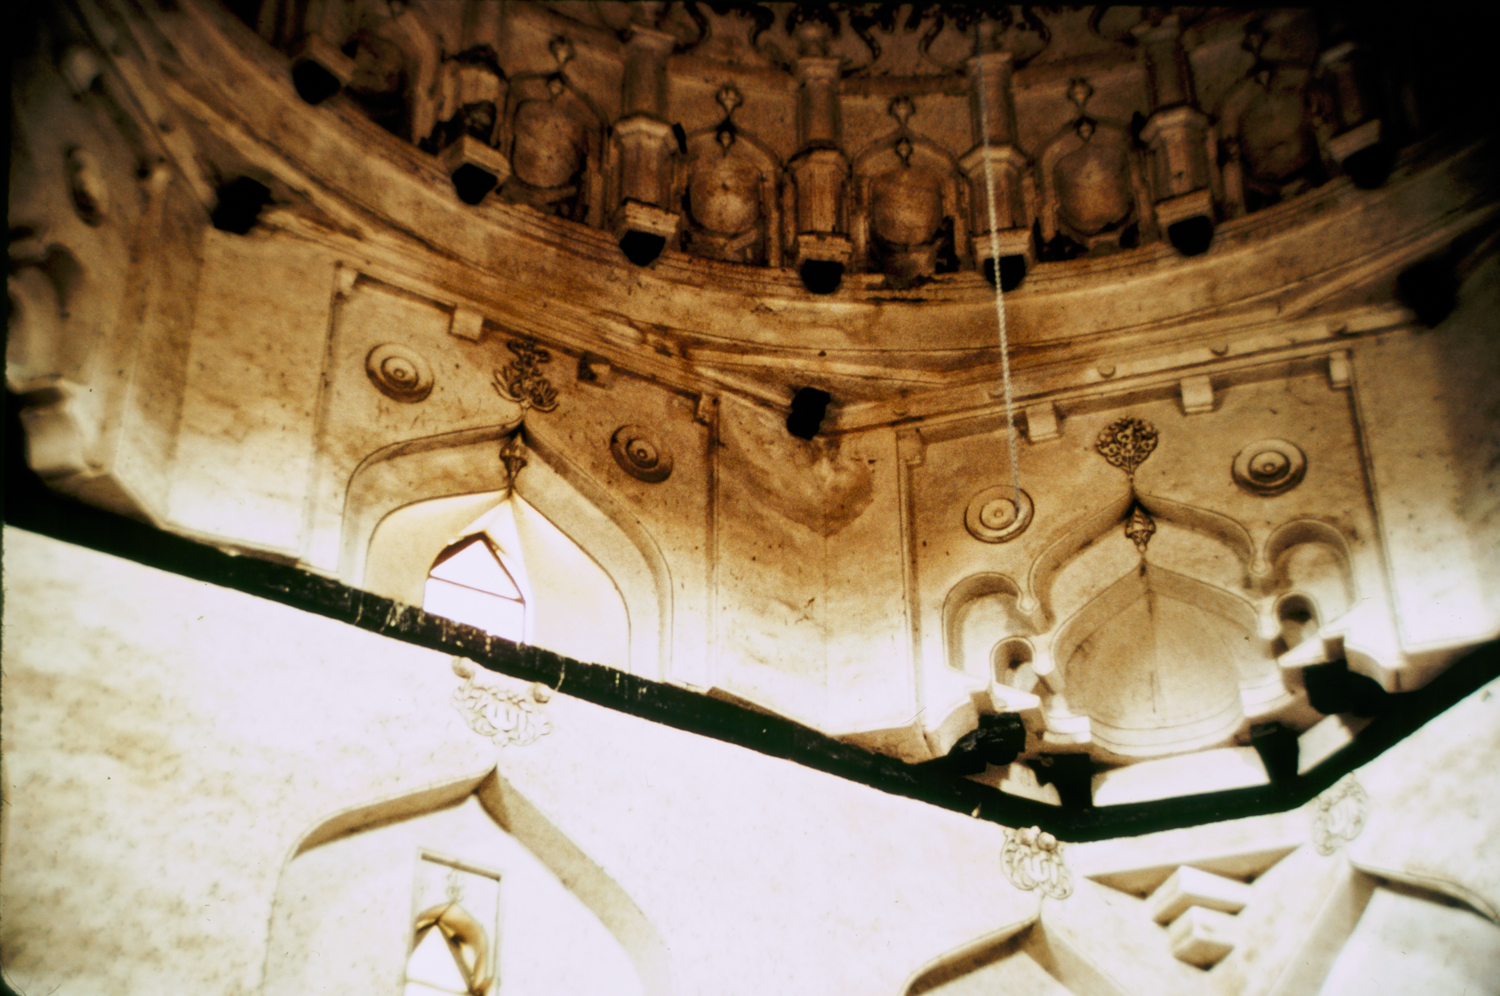 Interior drum detail of main dome